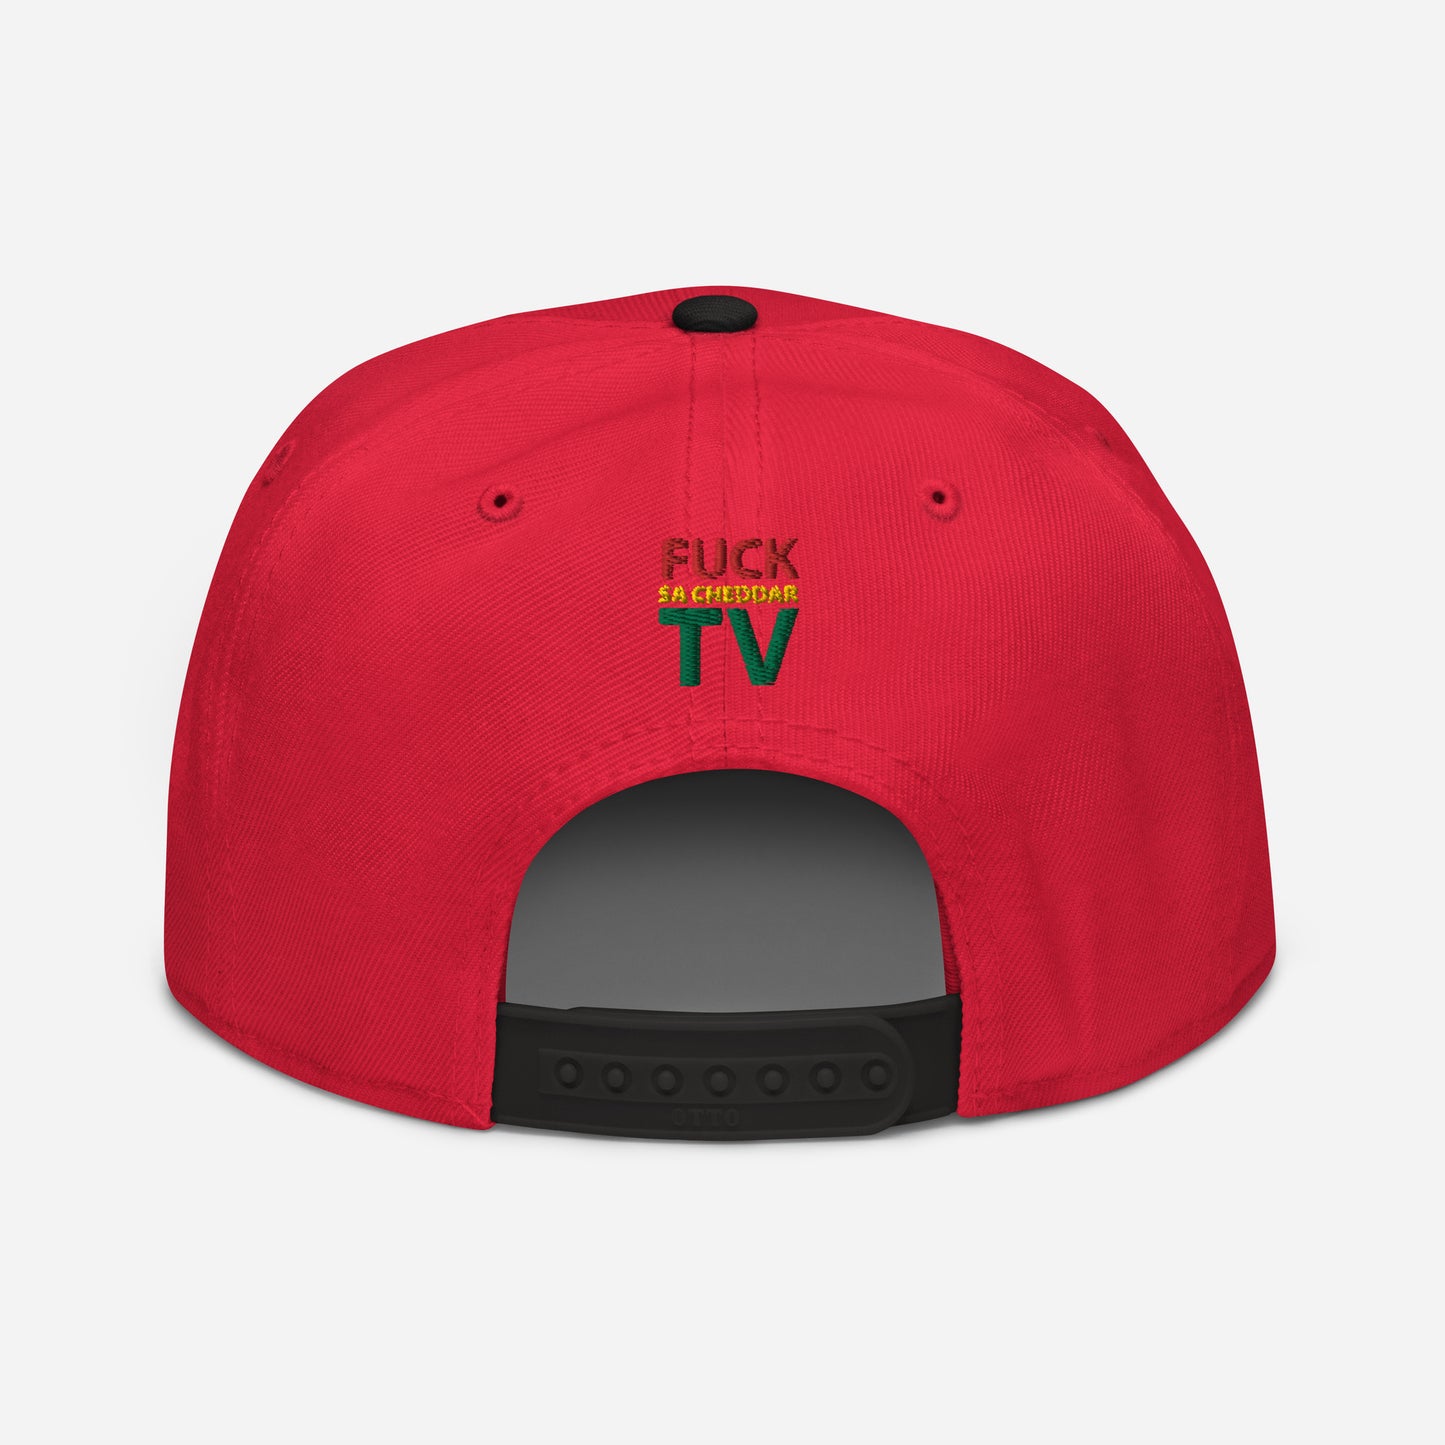 FUCK SA.CHEDDAR TV Snapback Hat